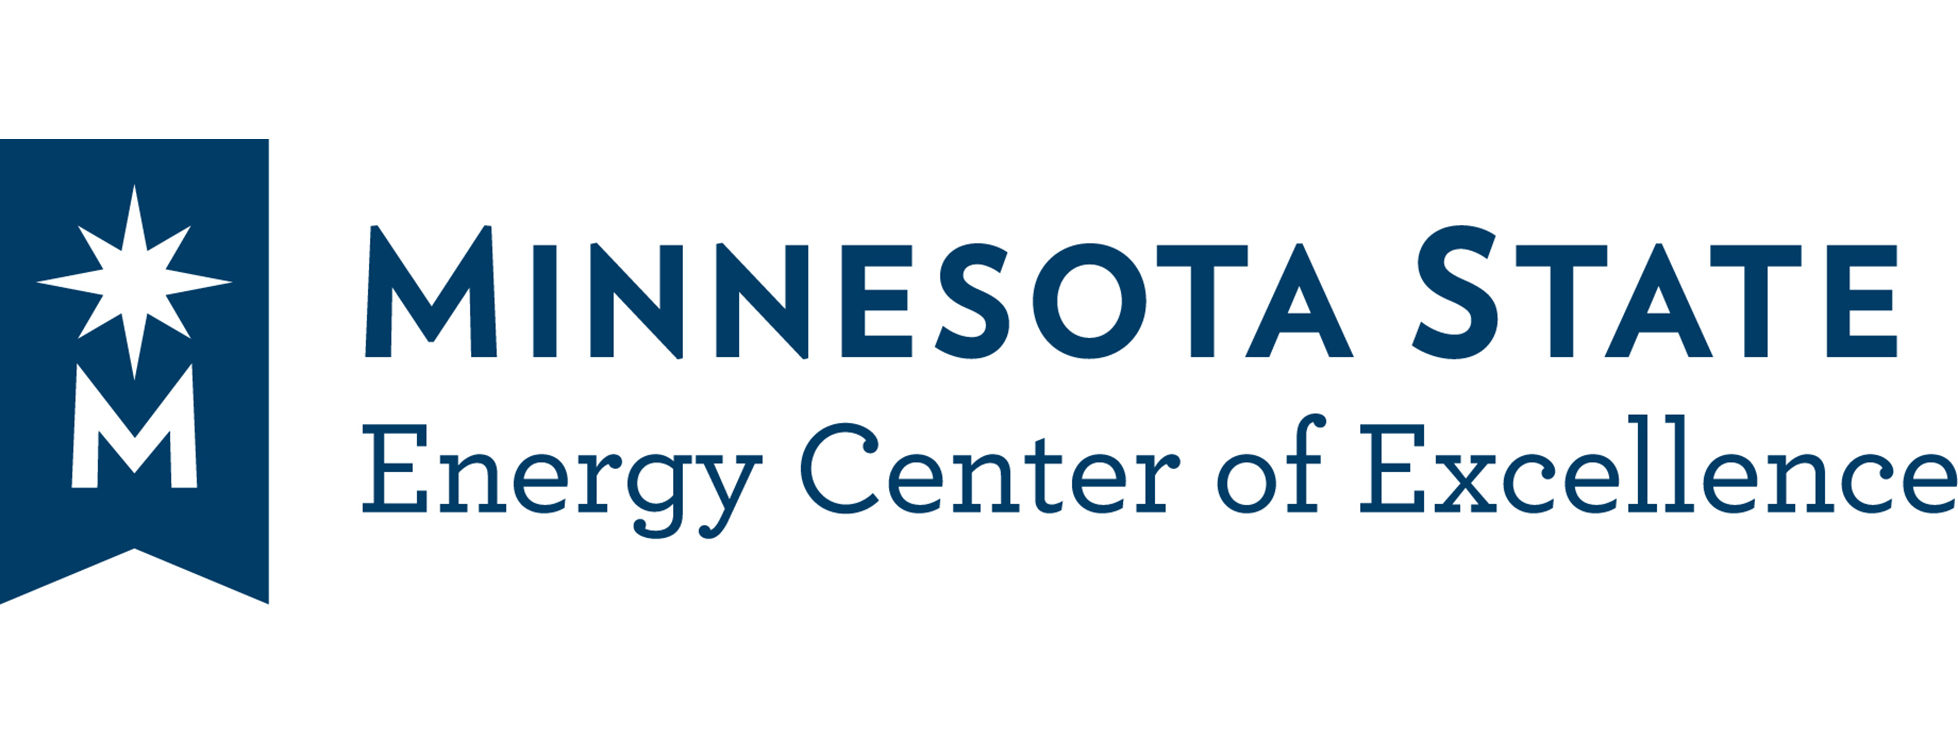 Minnesota State Energy Center of Excellence logo